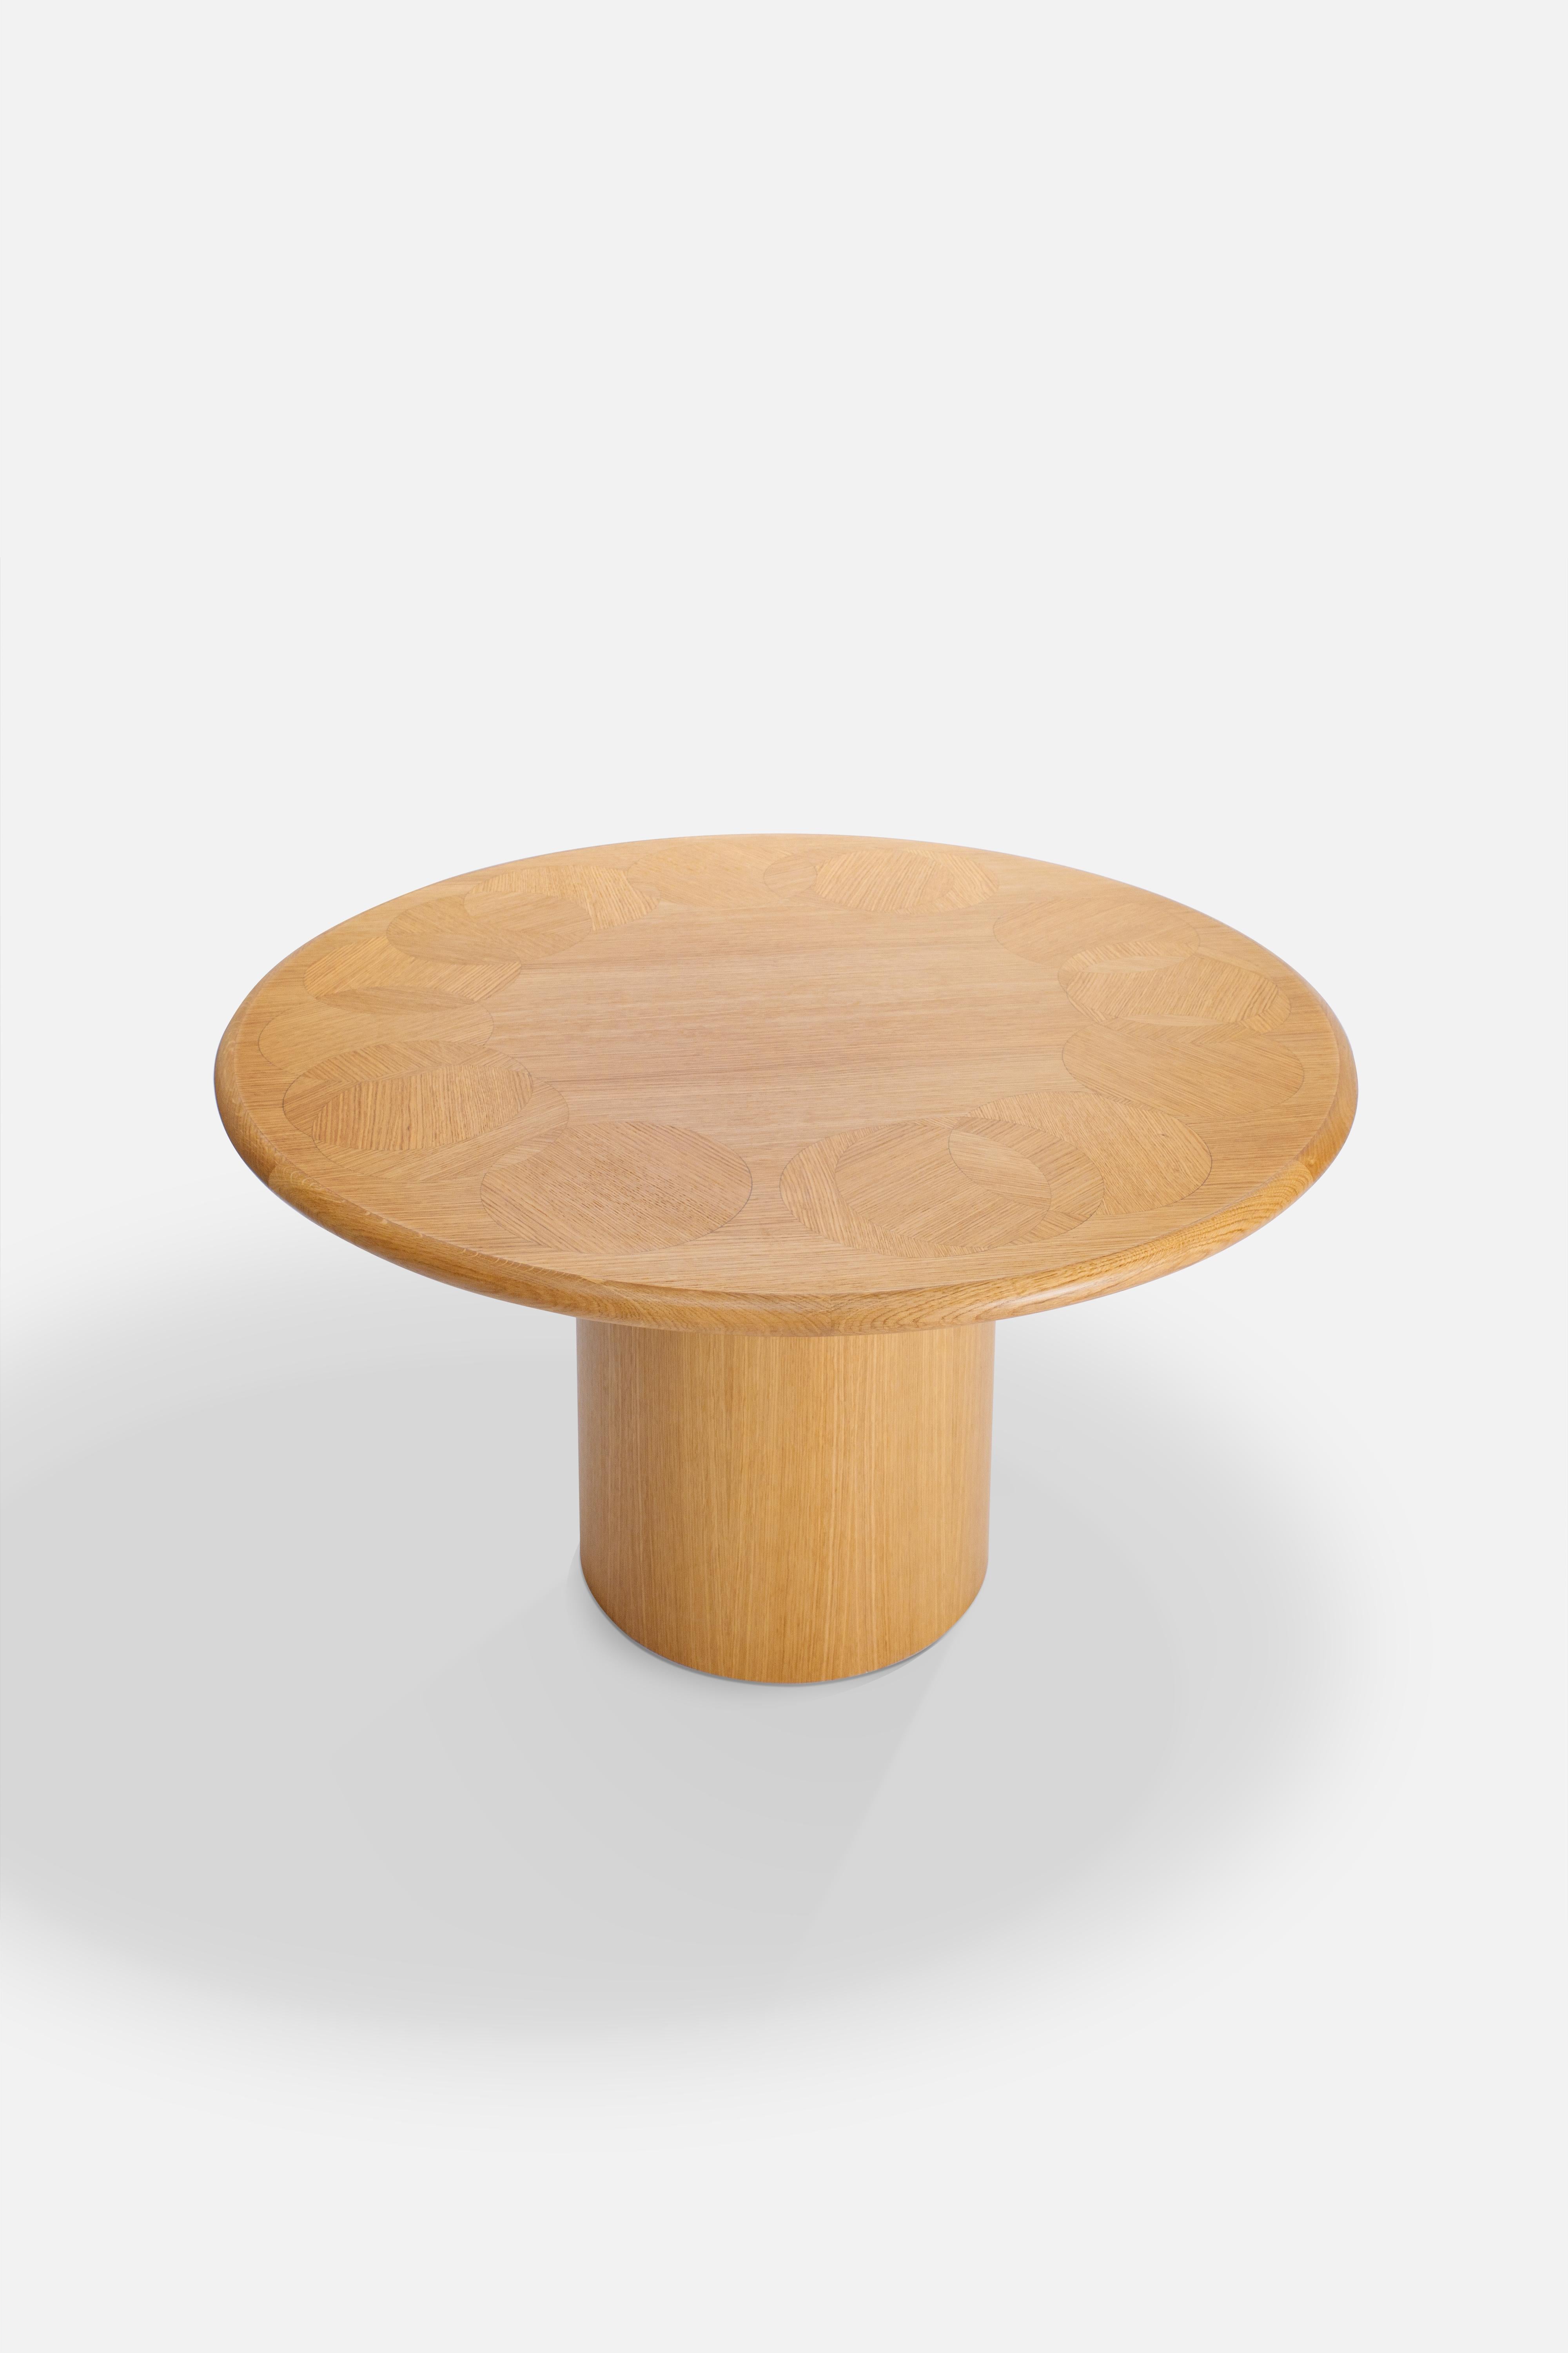 Veneer Contemporary Dining, Living Room Table NaessiStudio for Medulum Oak Wood For Sale